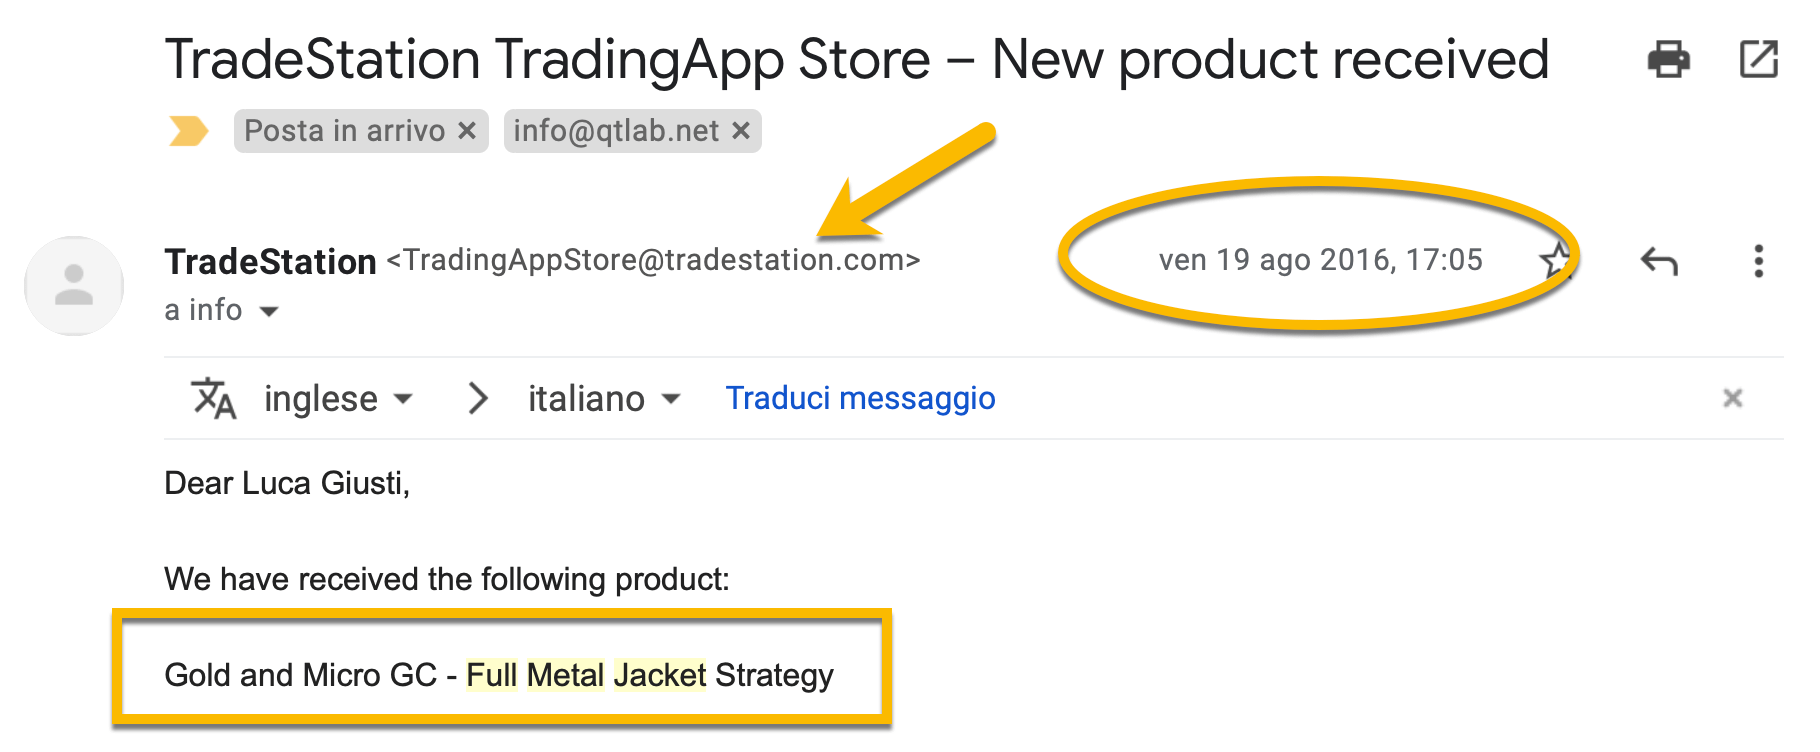 tradestation trading system automatico: full metal jacket